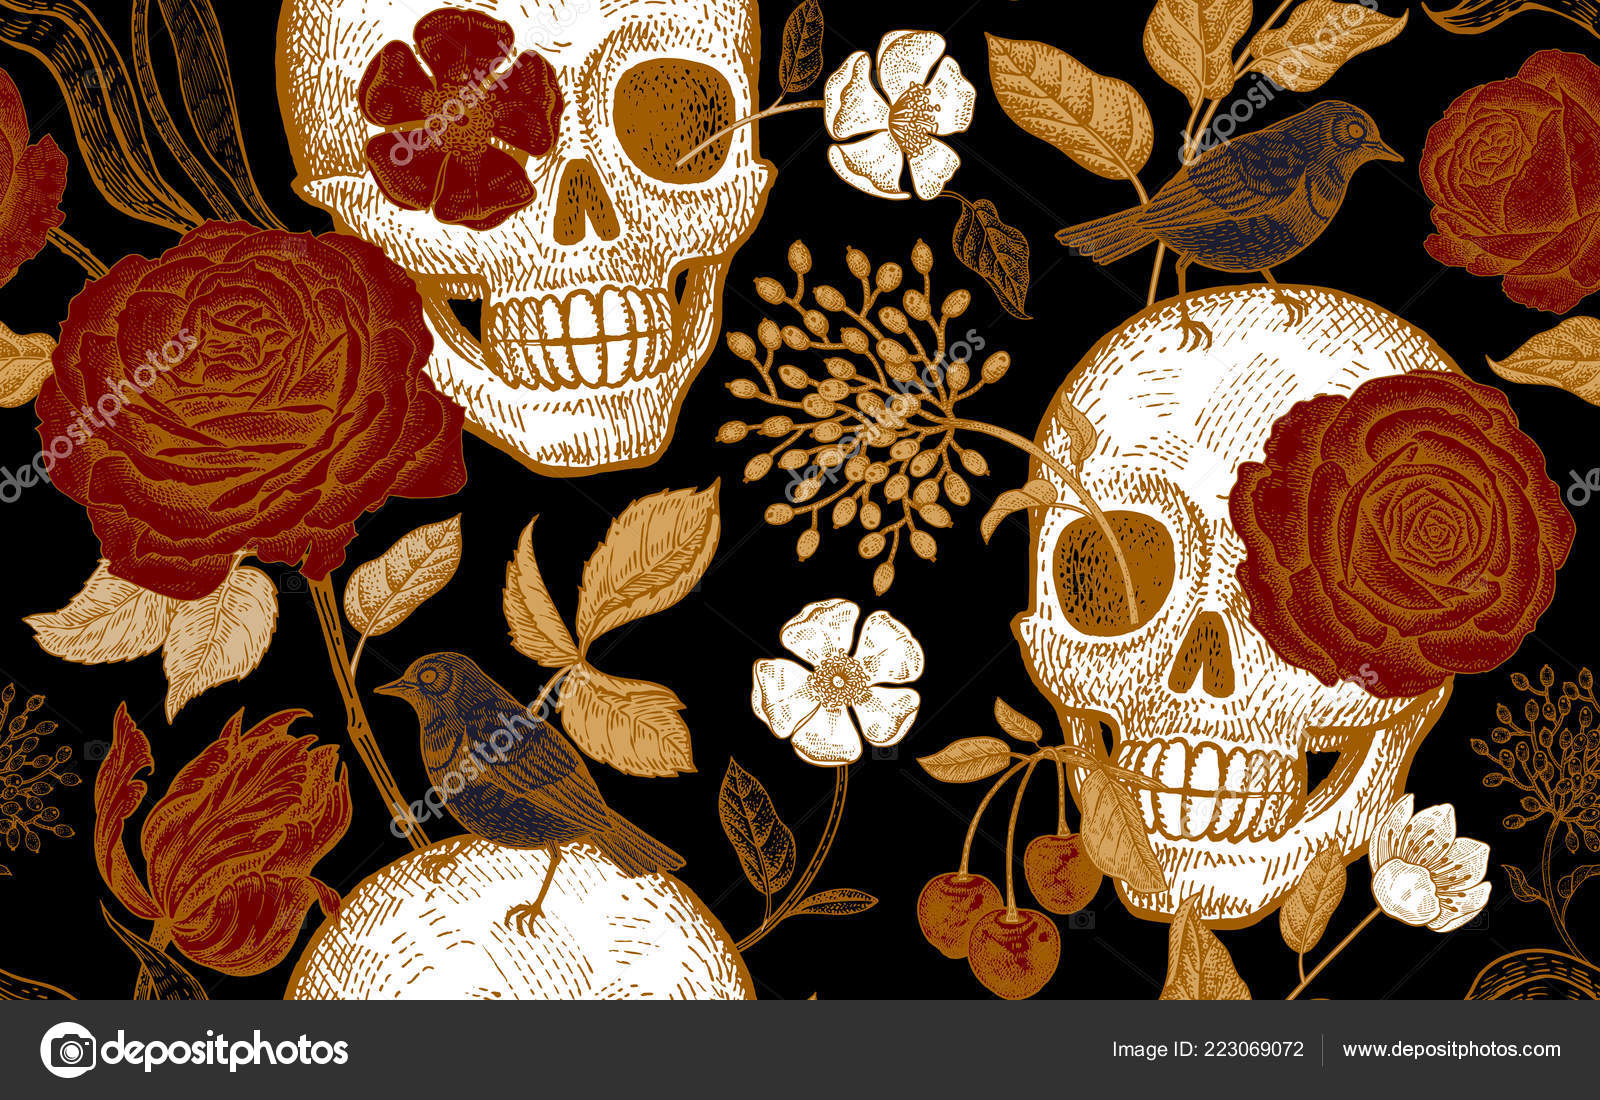 Skull and roses stock photo Image of skulls black  165758222